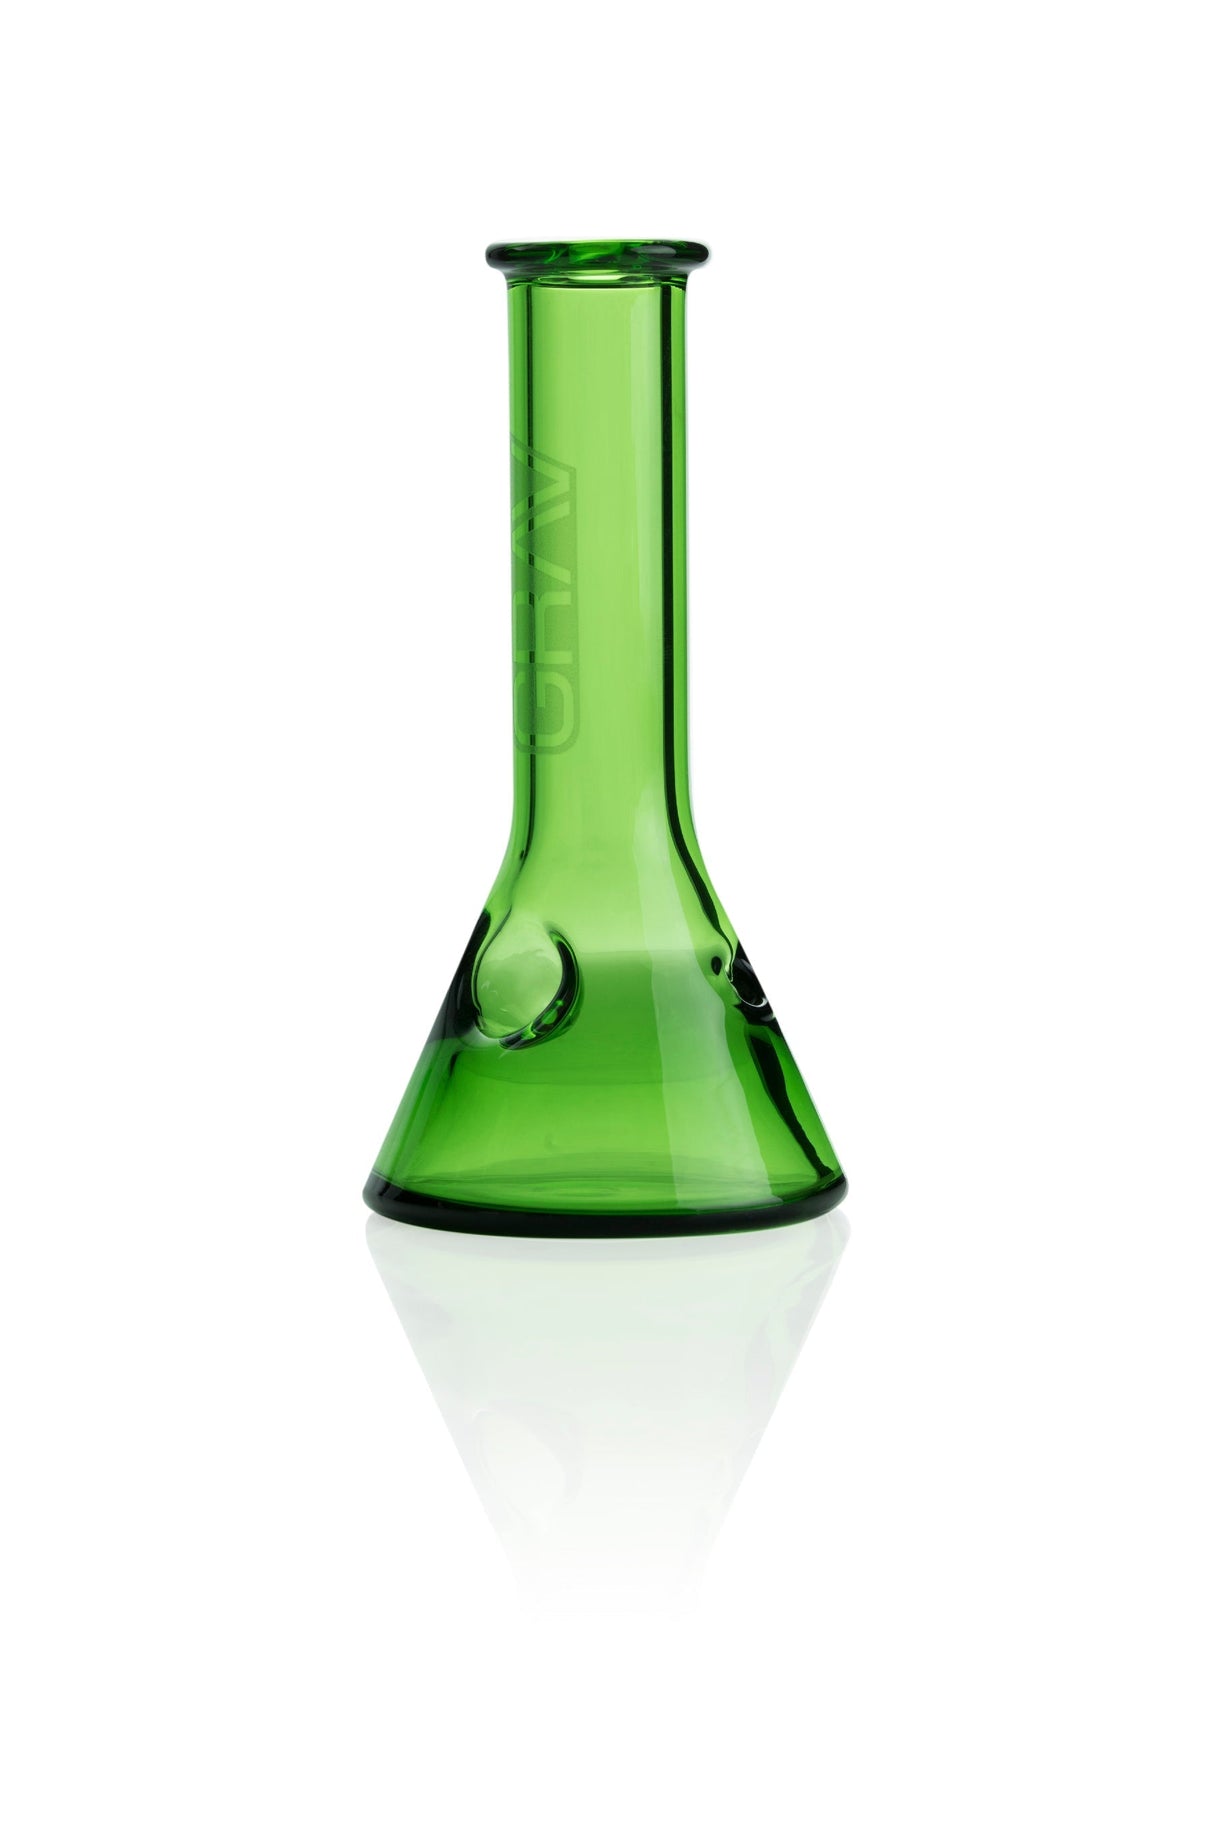 GRAV Beaker Spoon in Green - Borosilicate Glass Hand Pipe for Dry Herbs, Front View